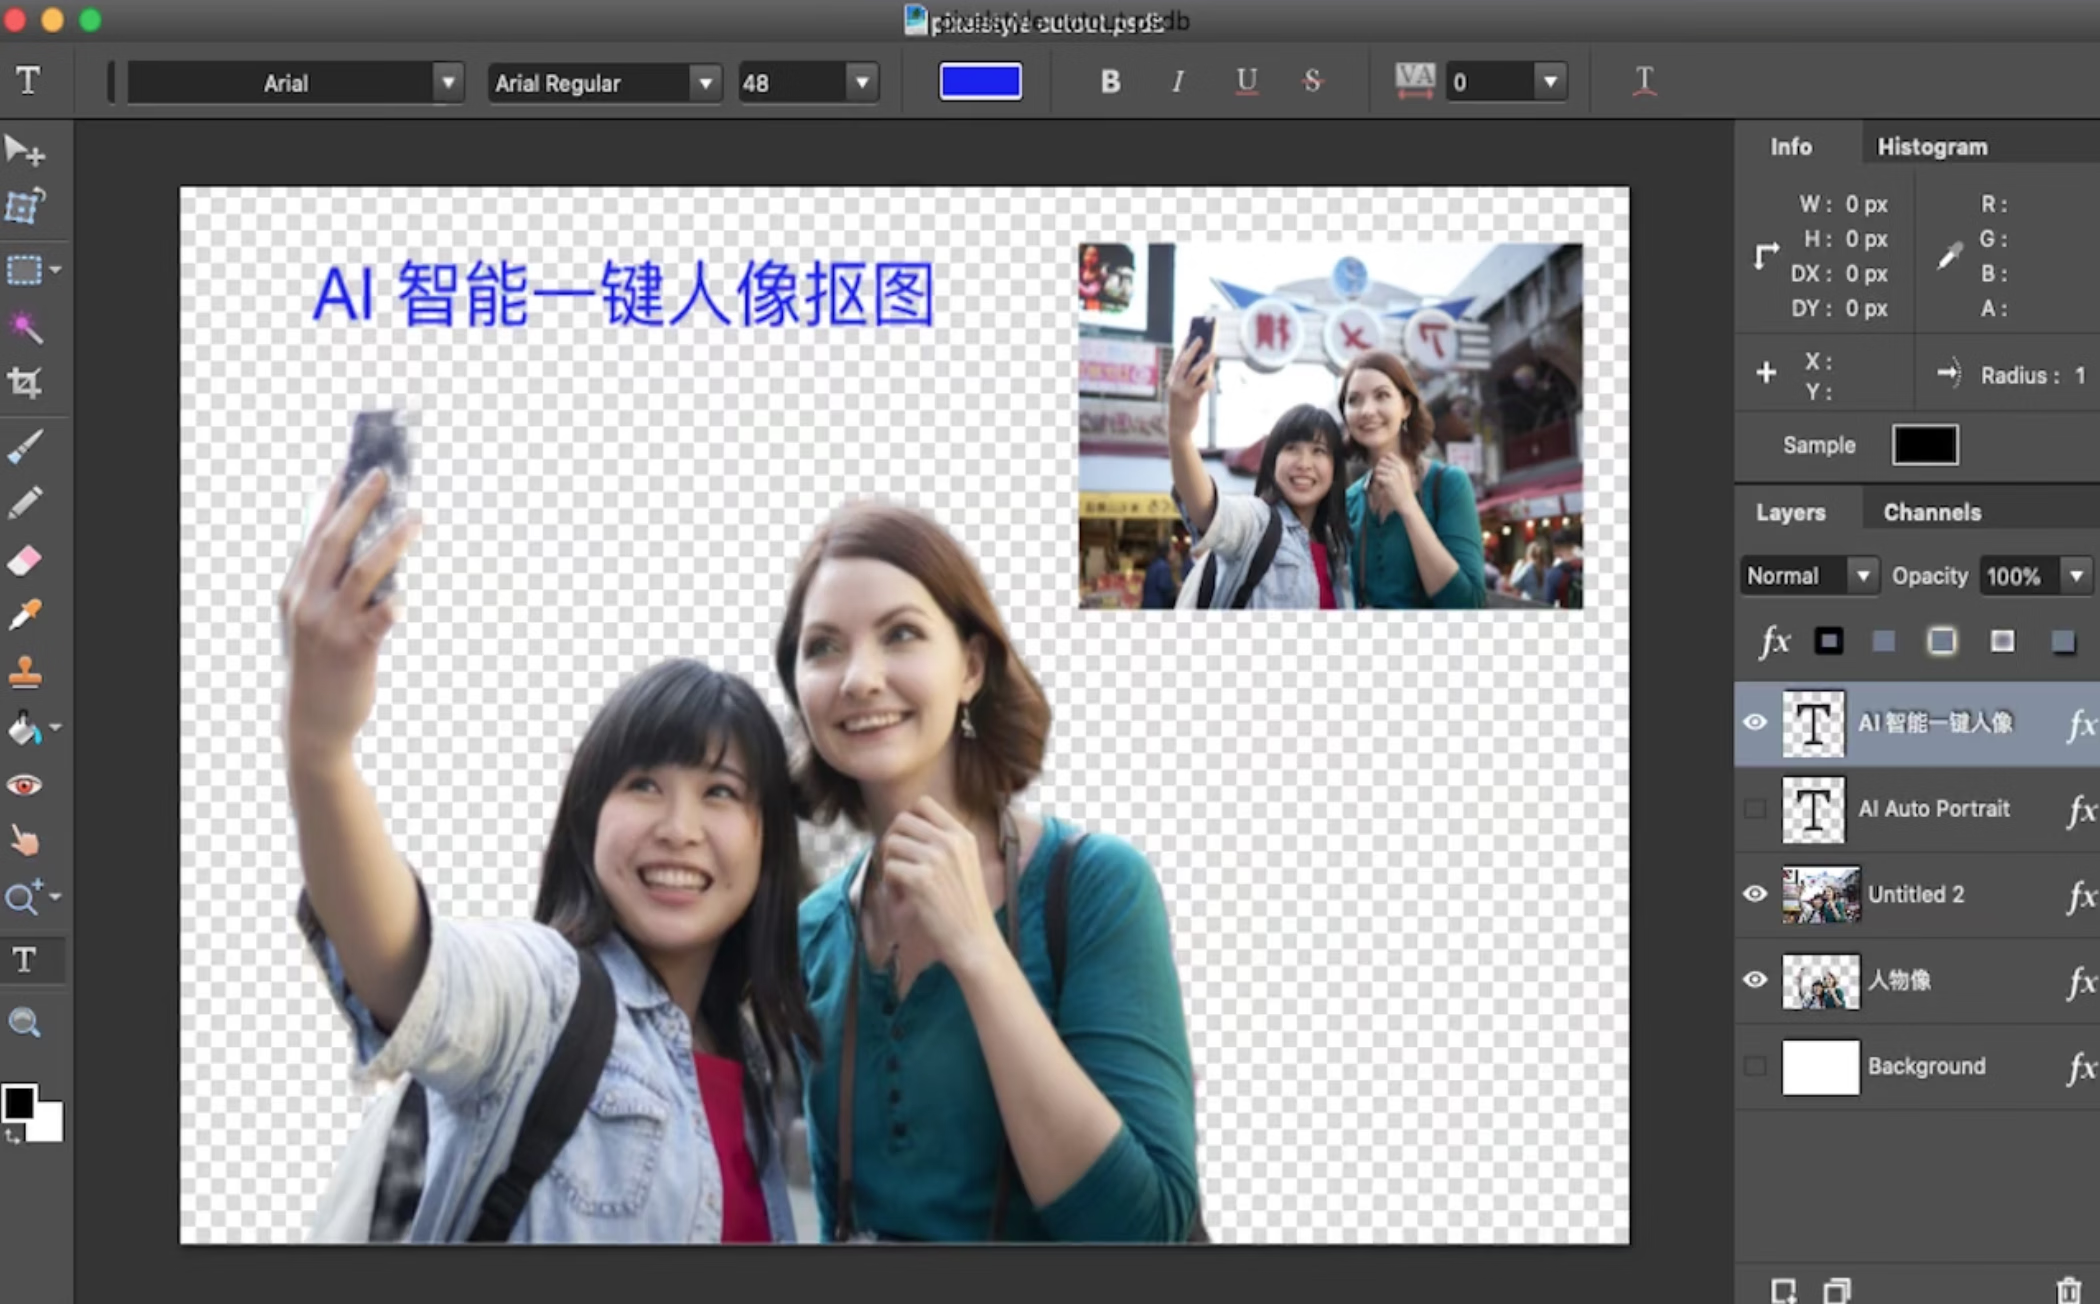 Pixelstyle Photo Editor for mac v3.9.0激活版 图像编辑器